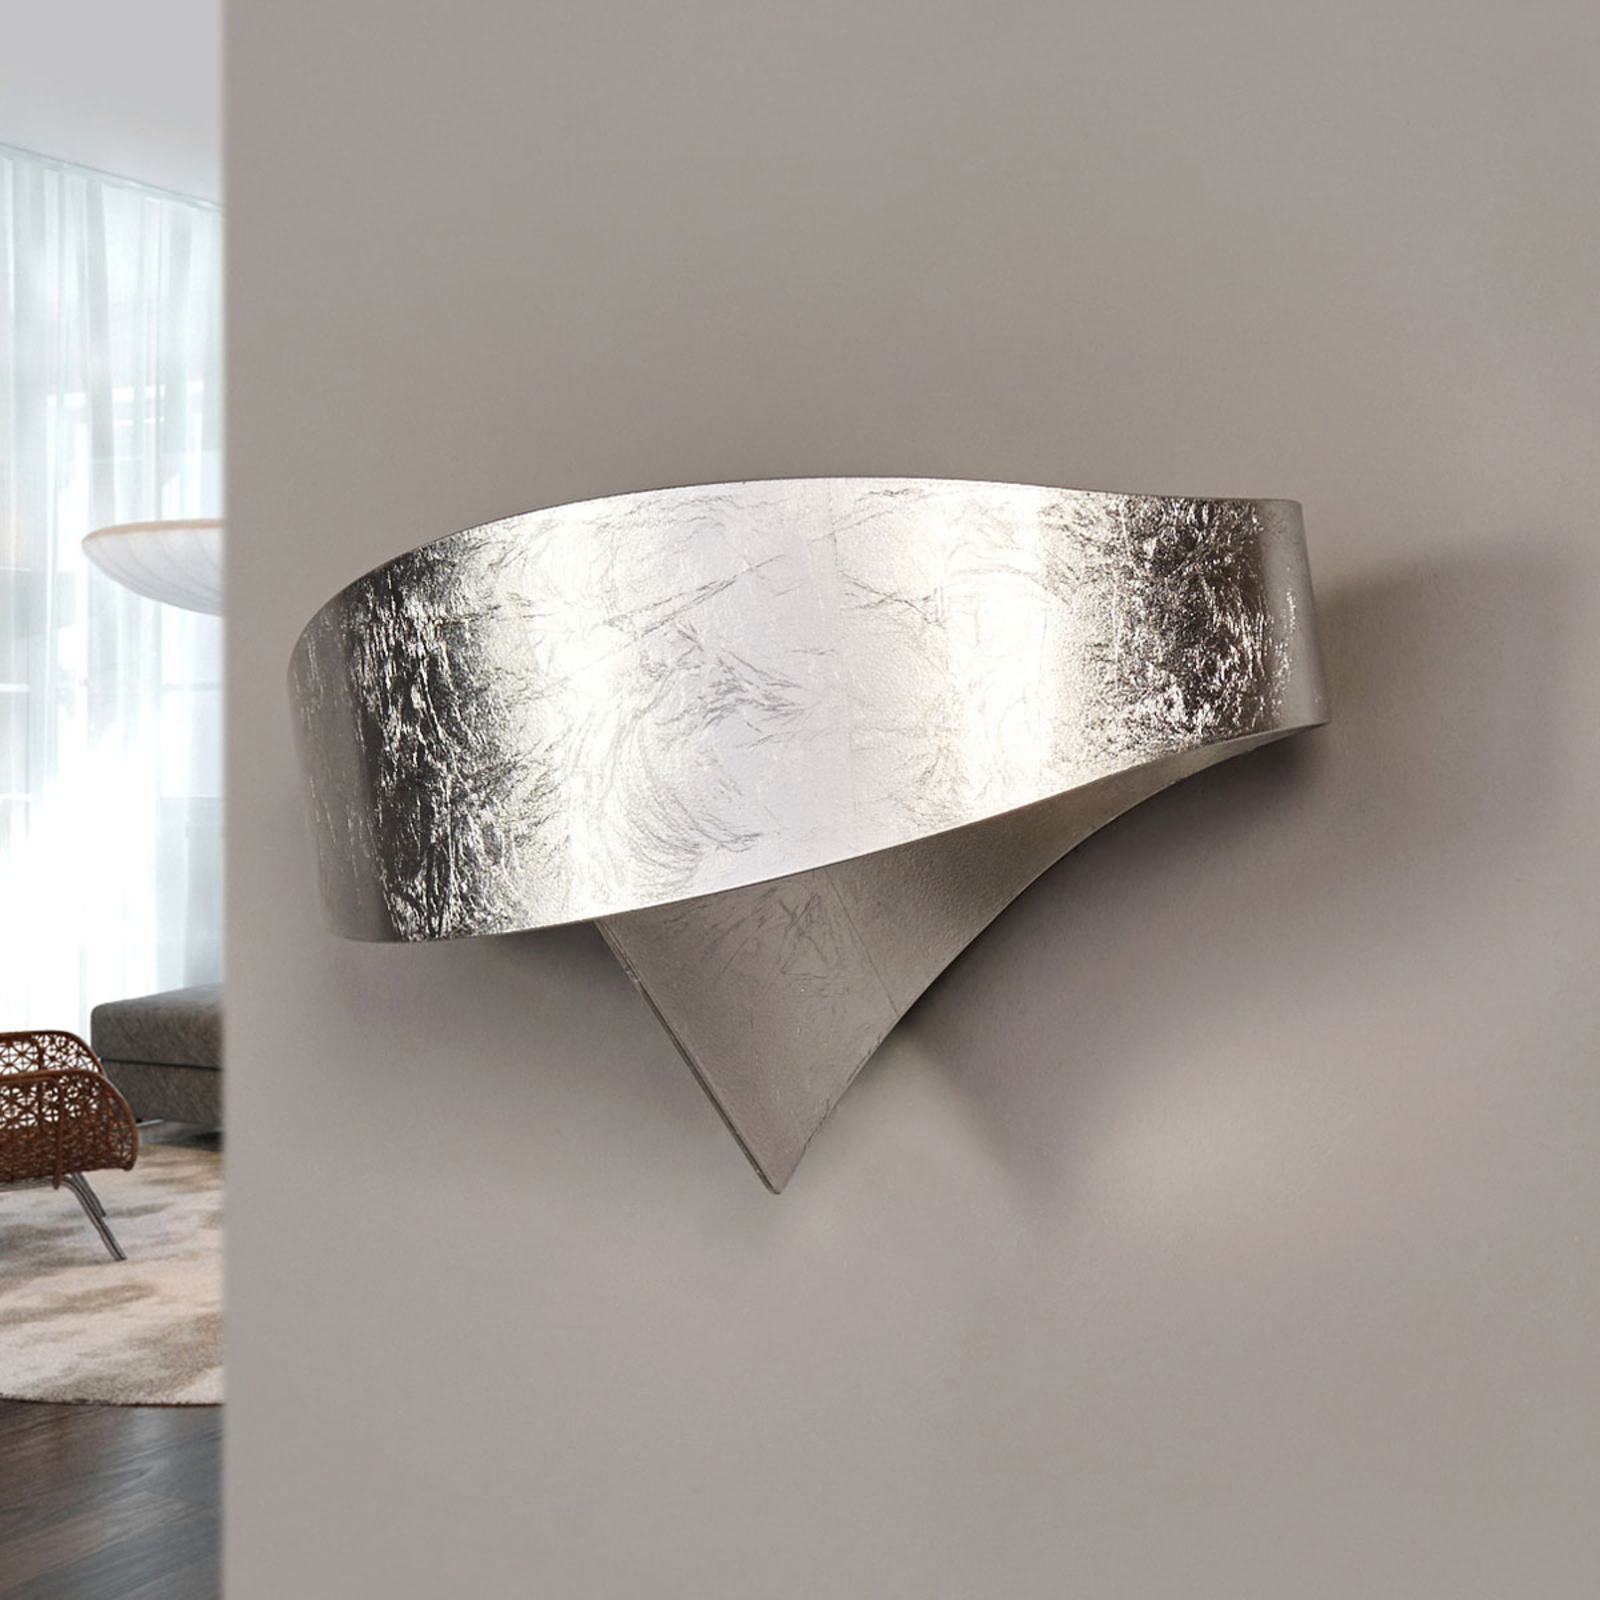 Silver designer wall light Scudo